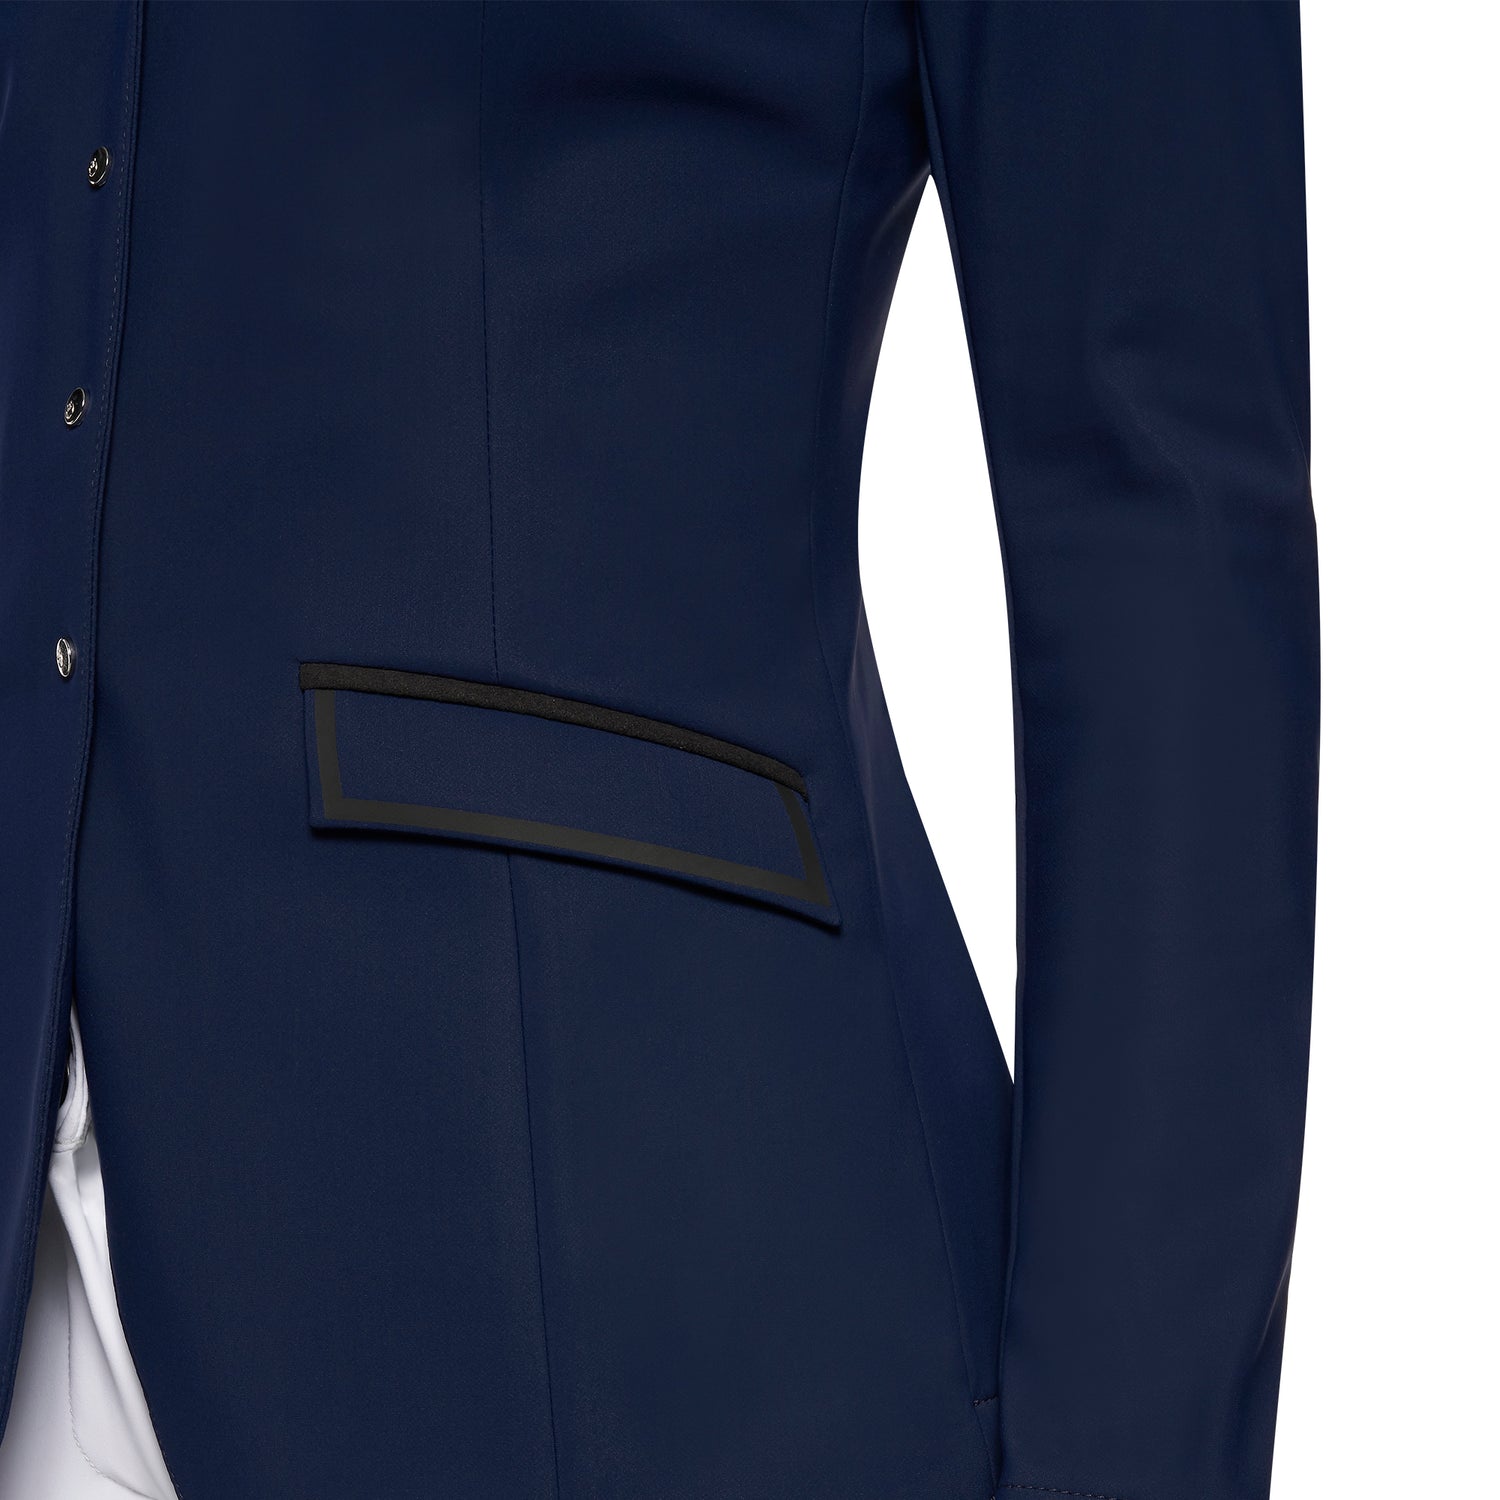 Cavalleria Toscana Royal Navy Blue lightweight zip jersey jacket